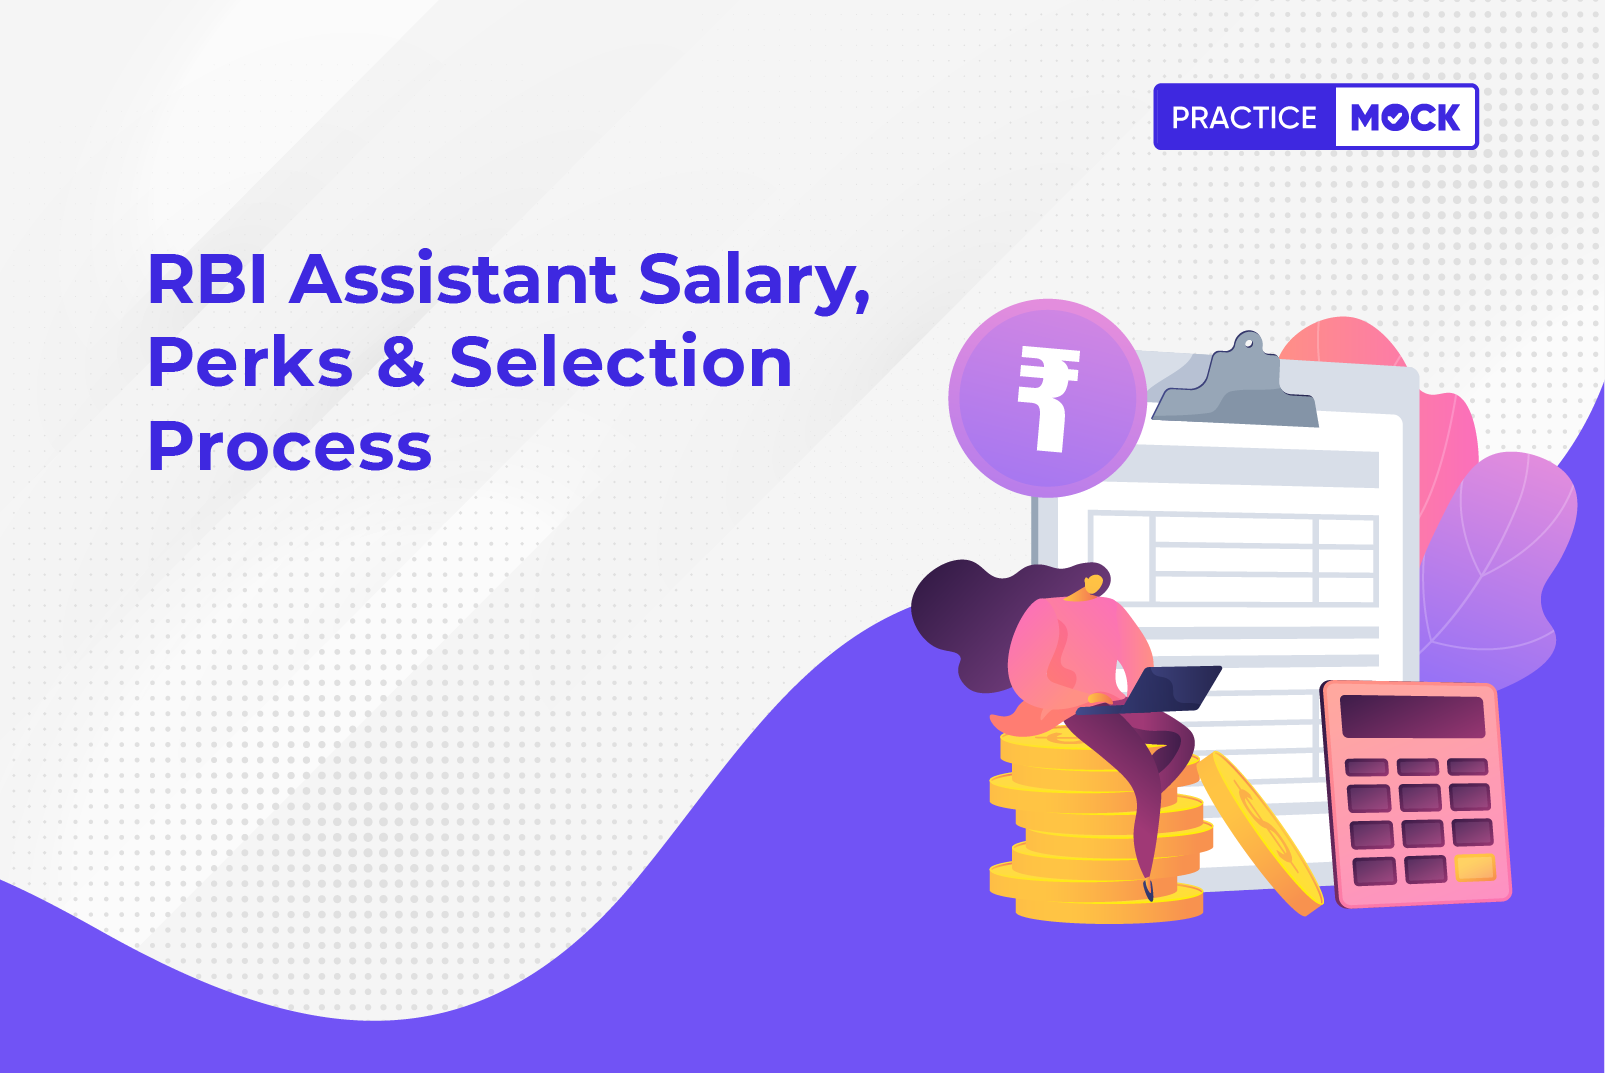 RBI Assistant Salary, Perks & Selection Process